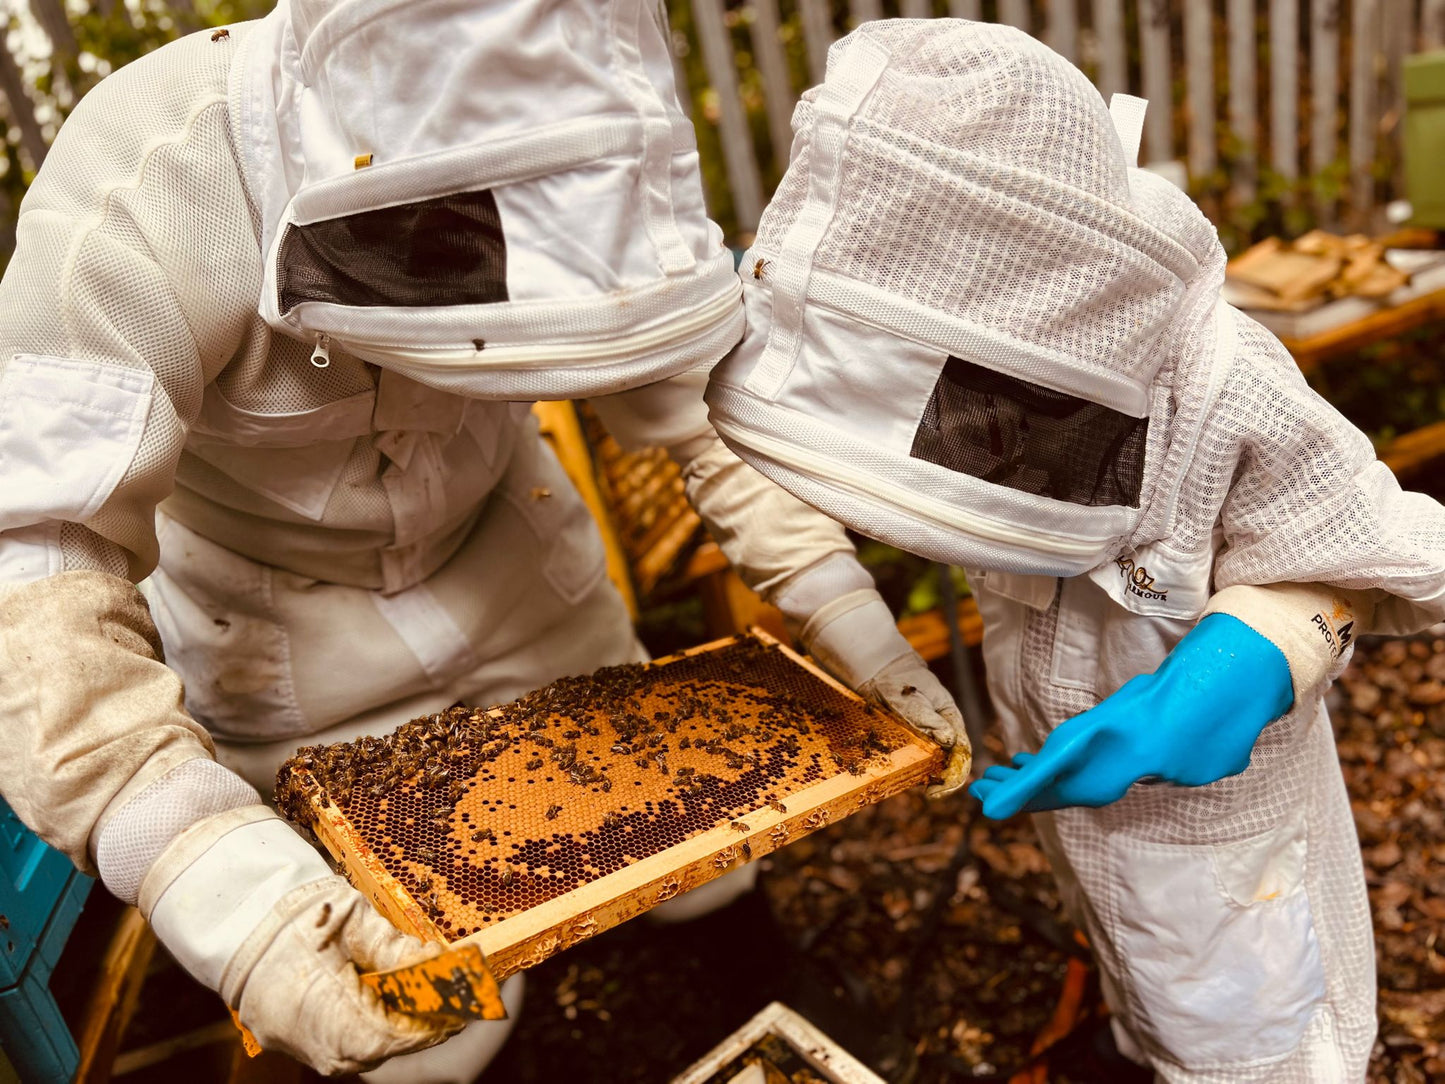 Beekeeping Experience Sheffield - Half Day